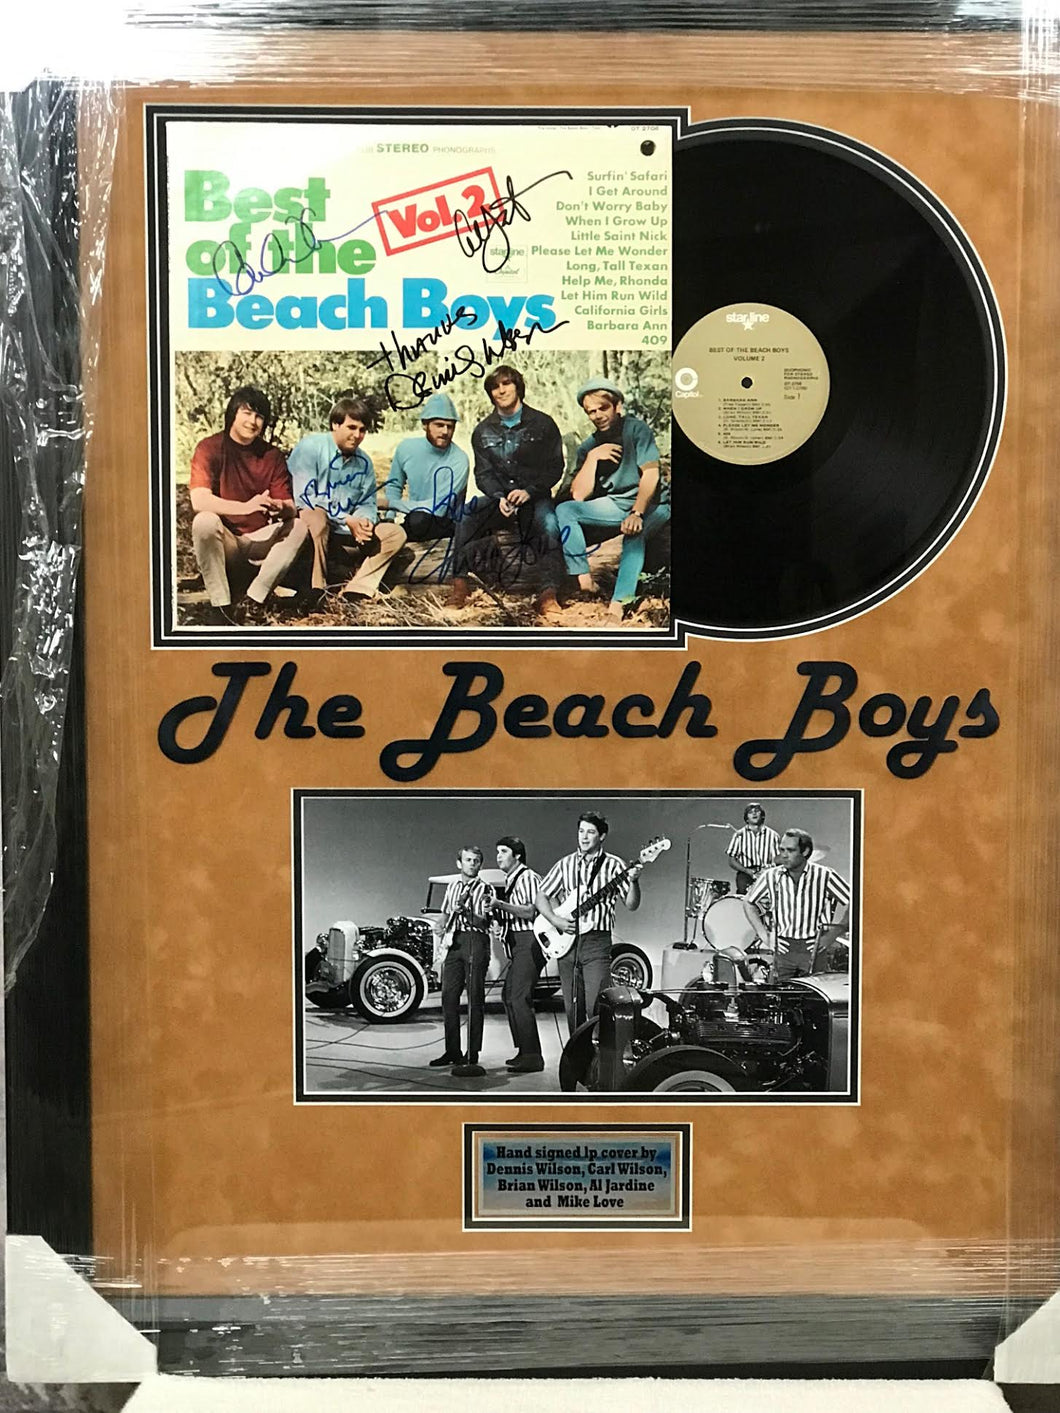 Best of Beach Boys Vol 2 Band Autographed Album Cover (Custom Framed)